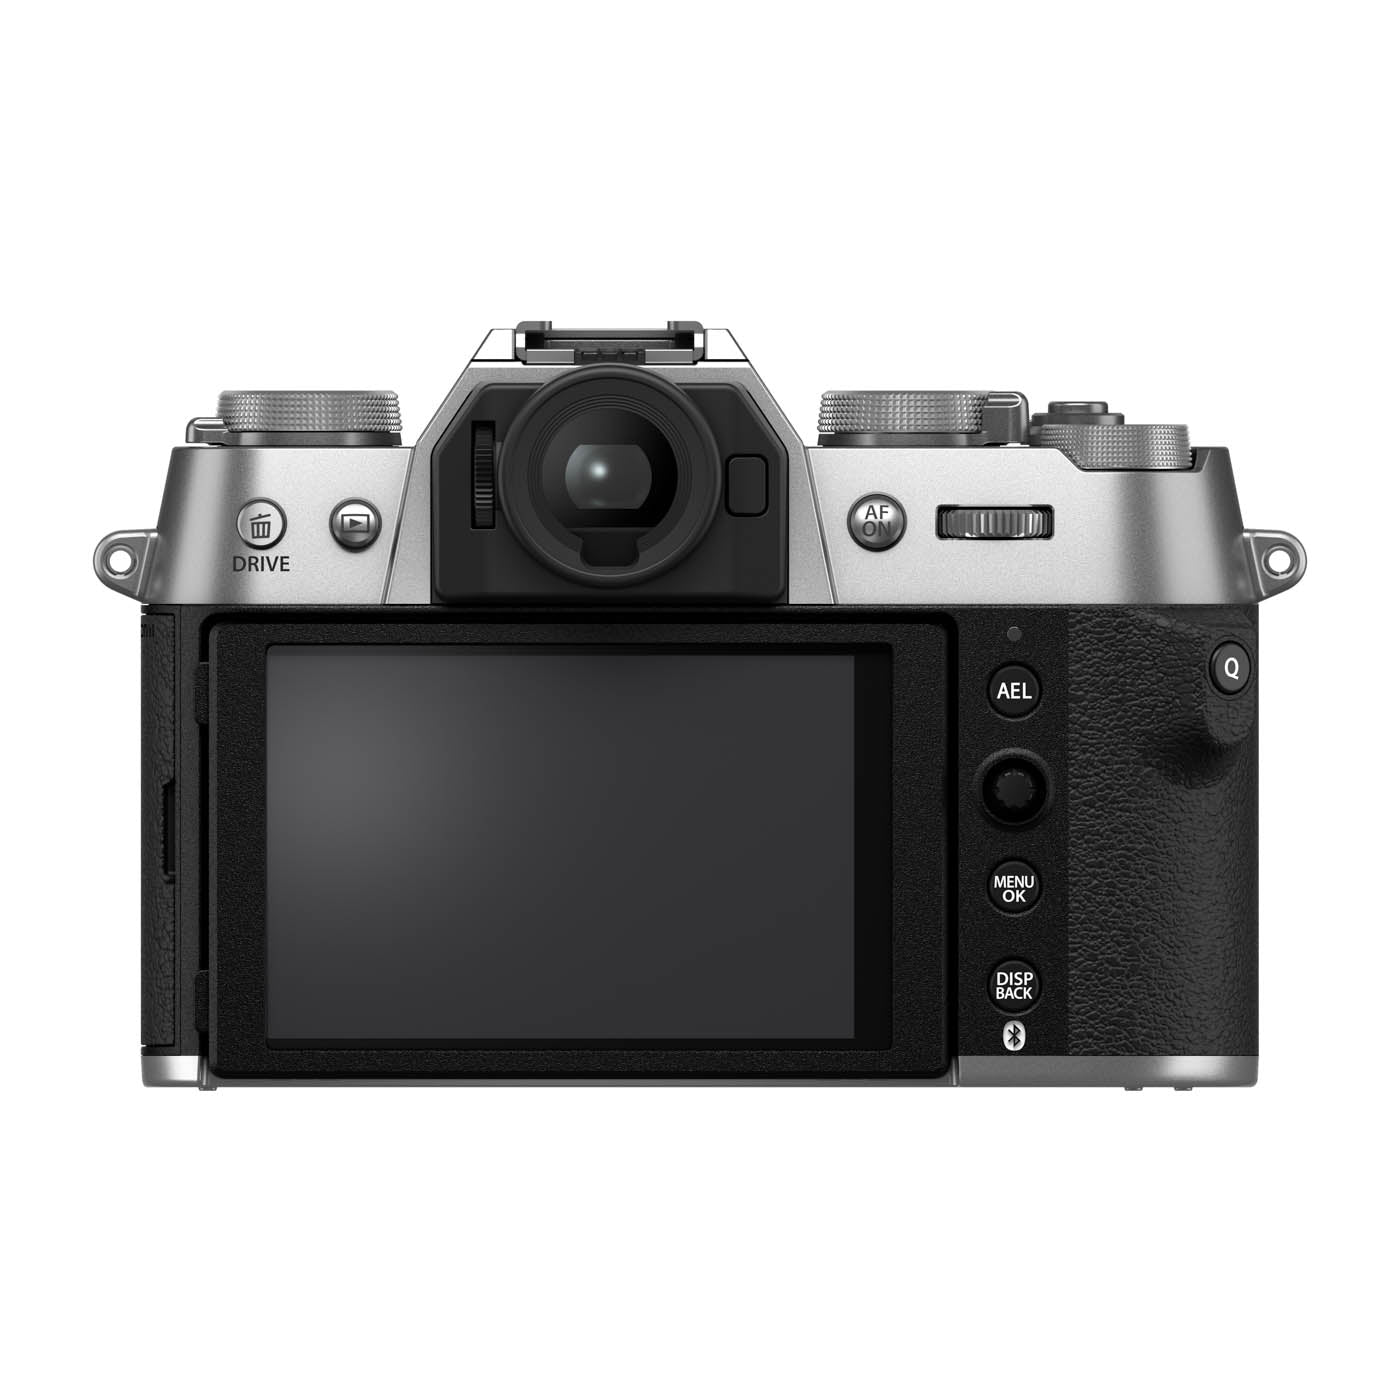 Fujifilm X-T50 Camera with XC 15-45mm F3.5-5.6 OIS PZ Lens - Silver